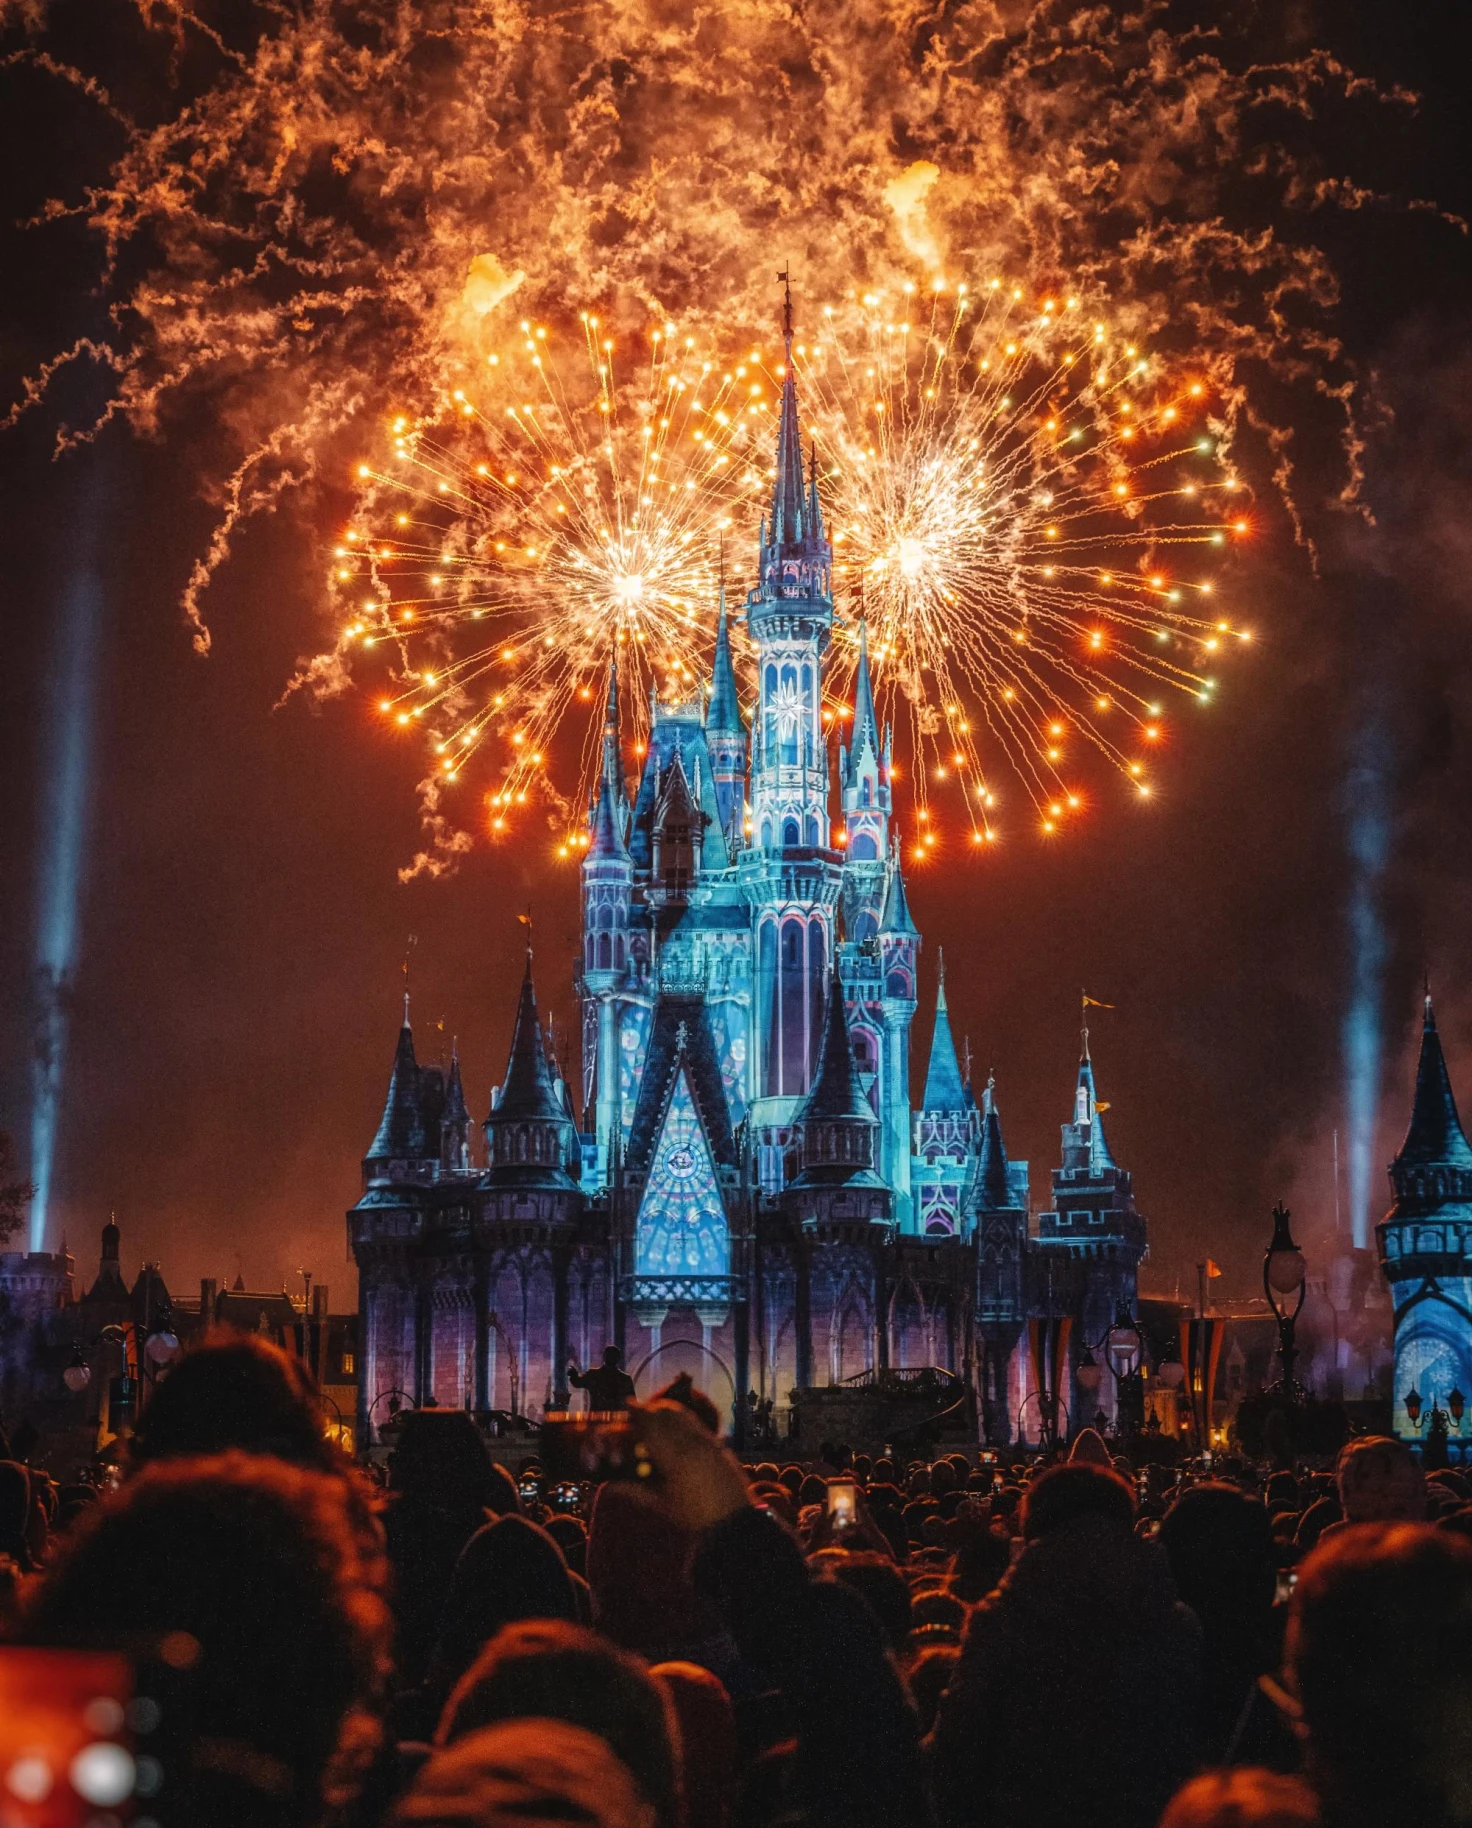 fireworks behind a Disney castle